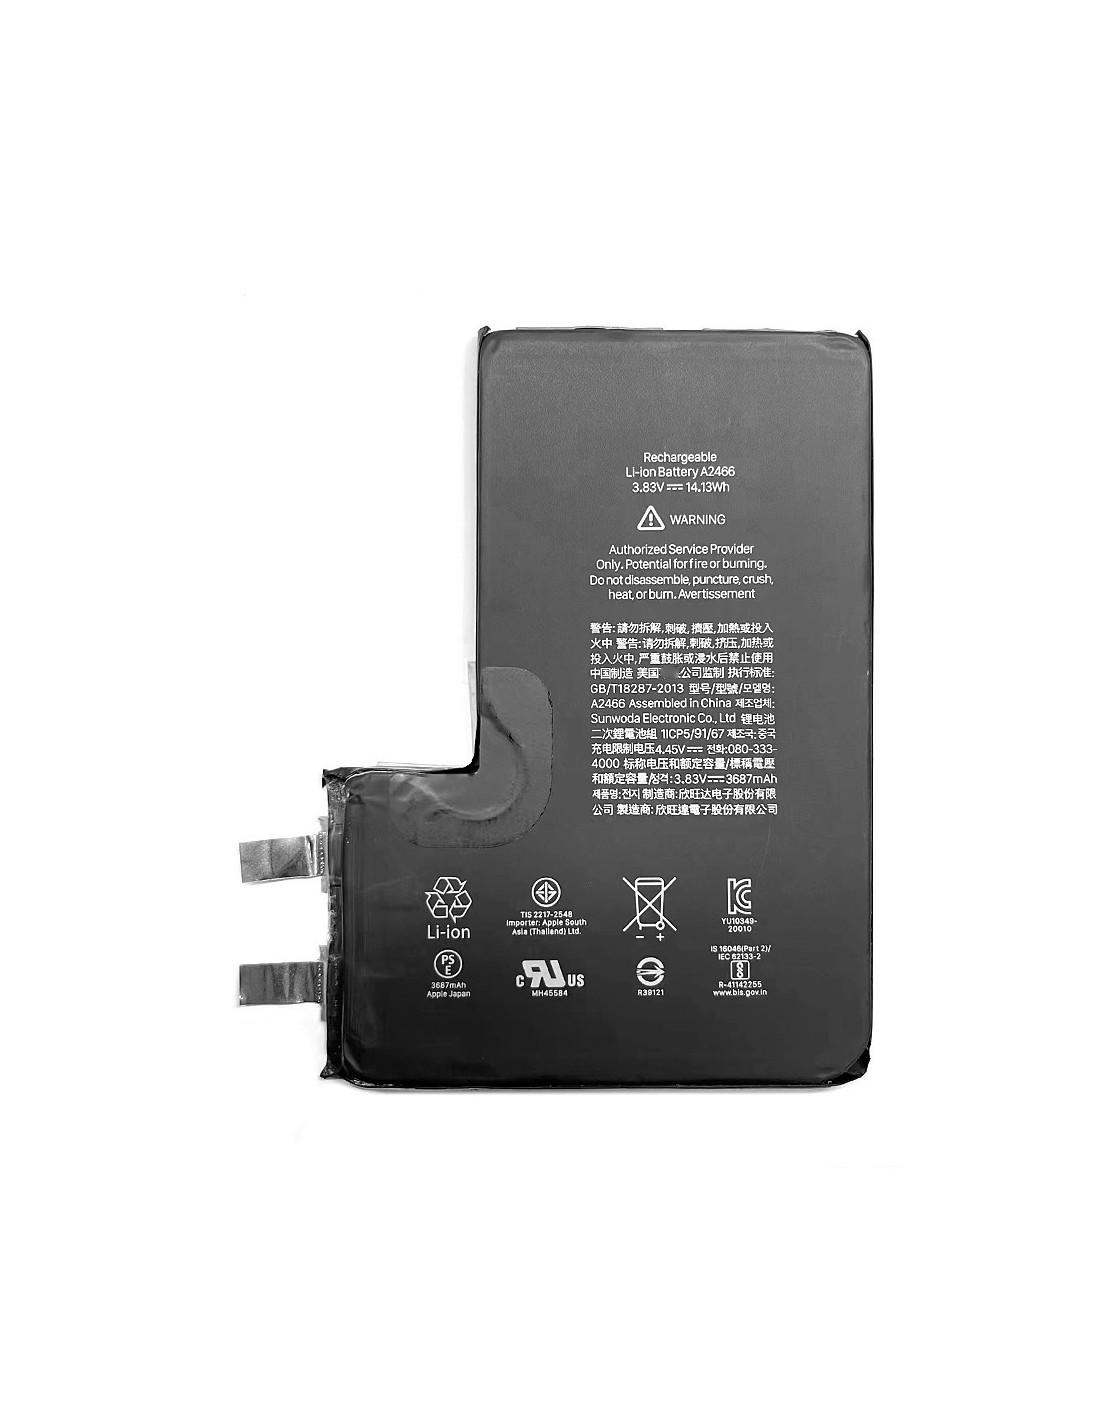 Bateria Para iPhone 12 Pro Max + Adhesivo Regalo - Dcompras